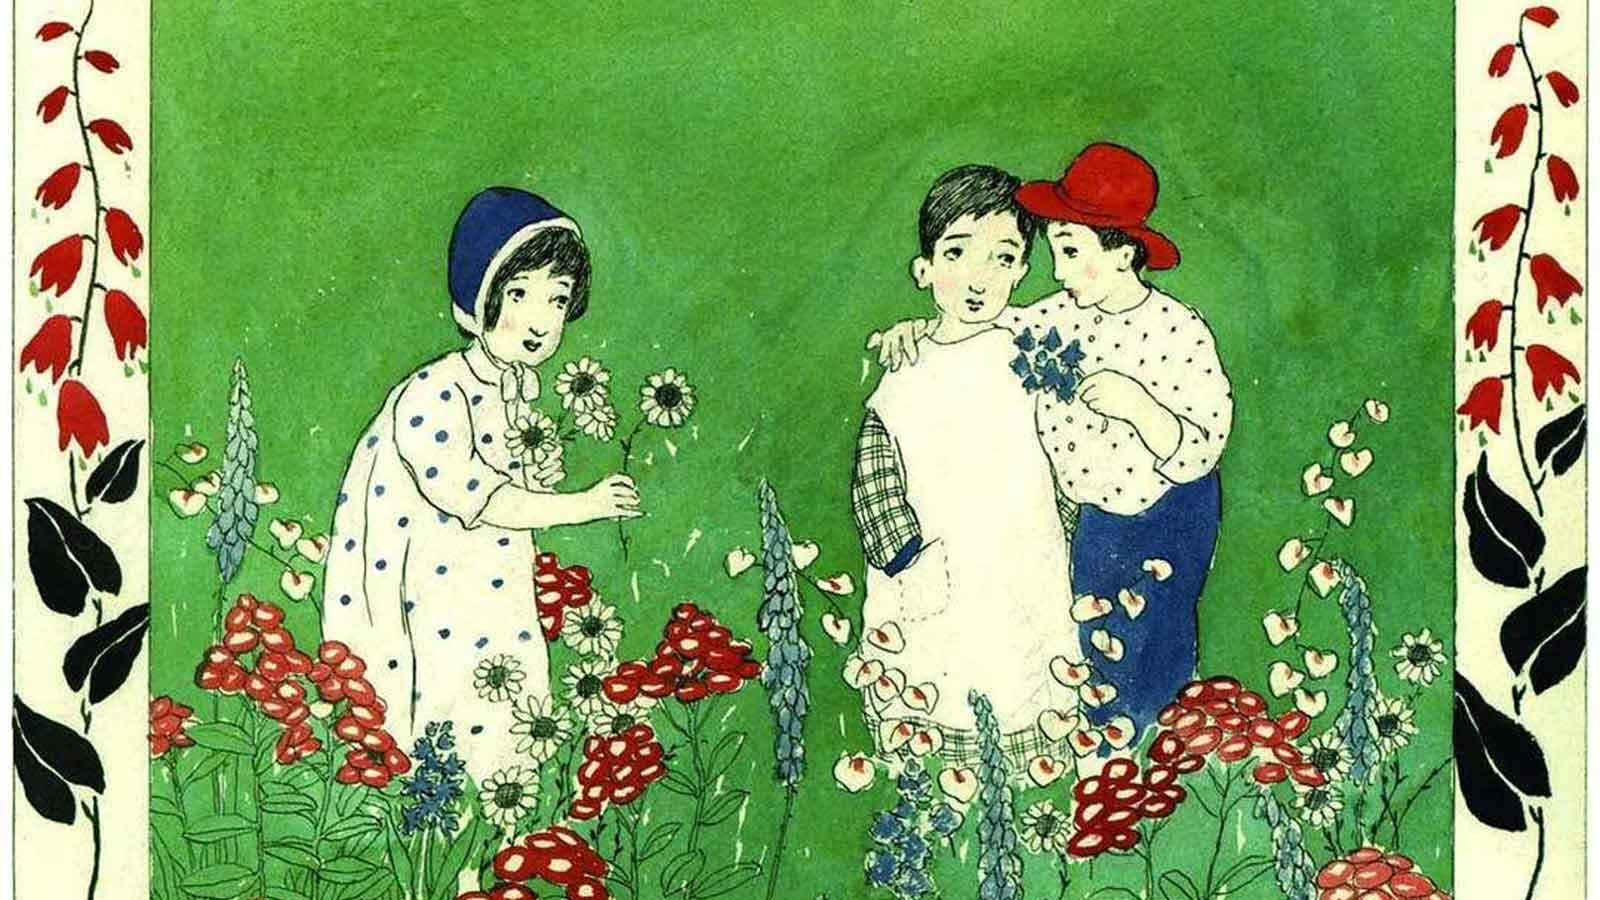 Three Japanese youth enjoying spring in a flower garden